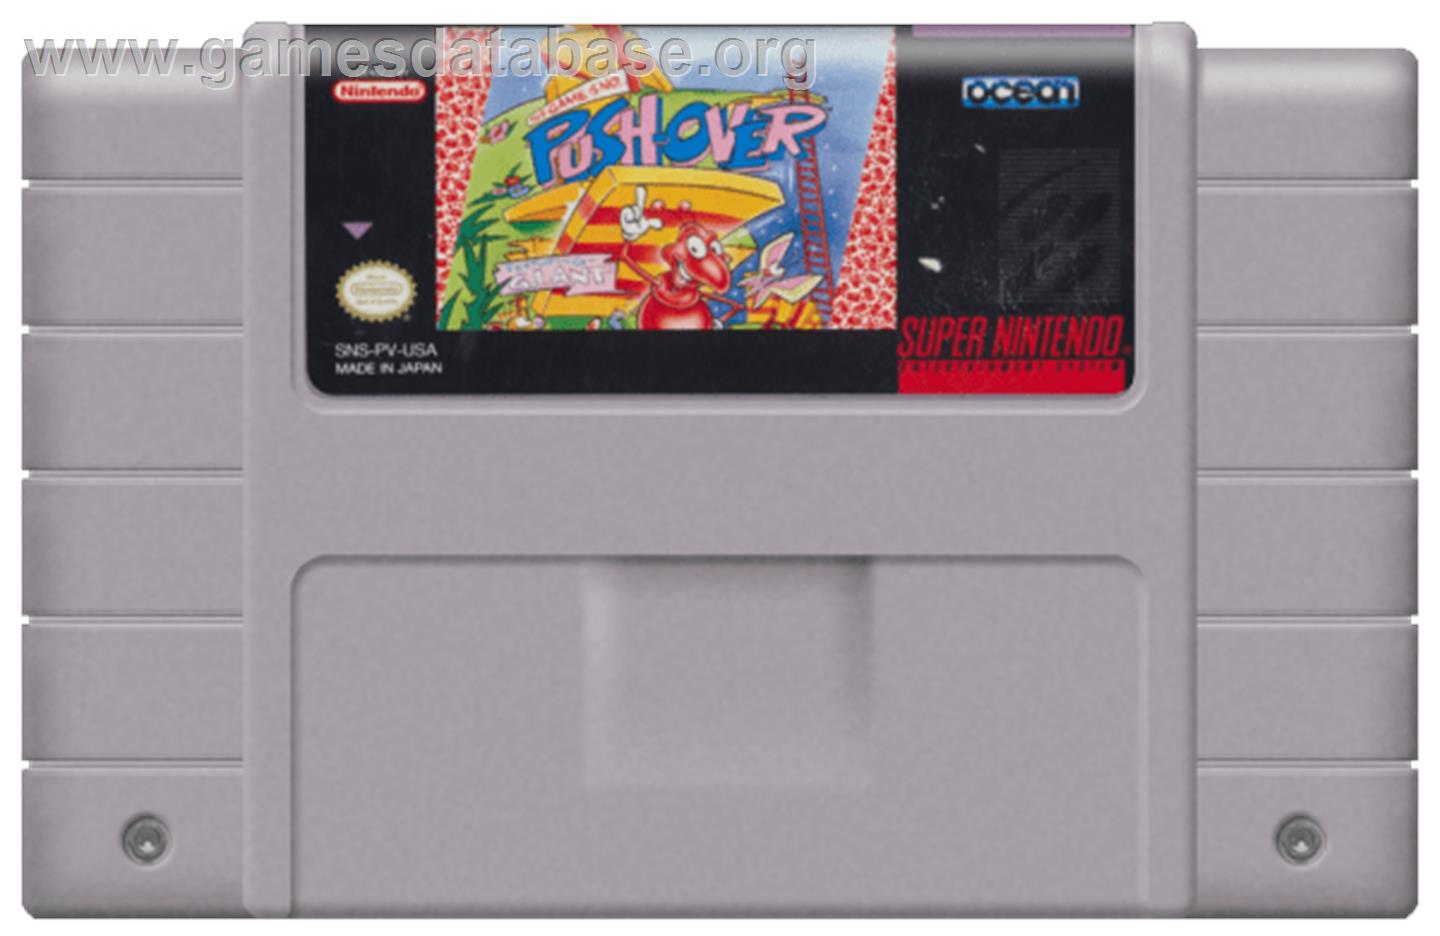 Push-Over - Nintendo SNES - Artwork - Cartridge